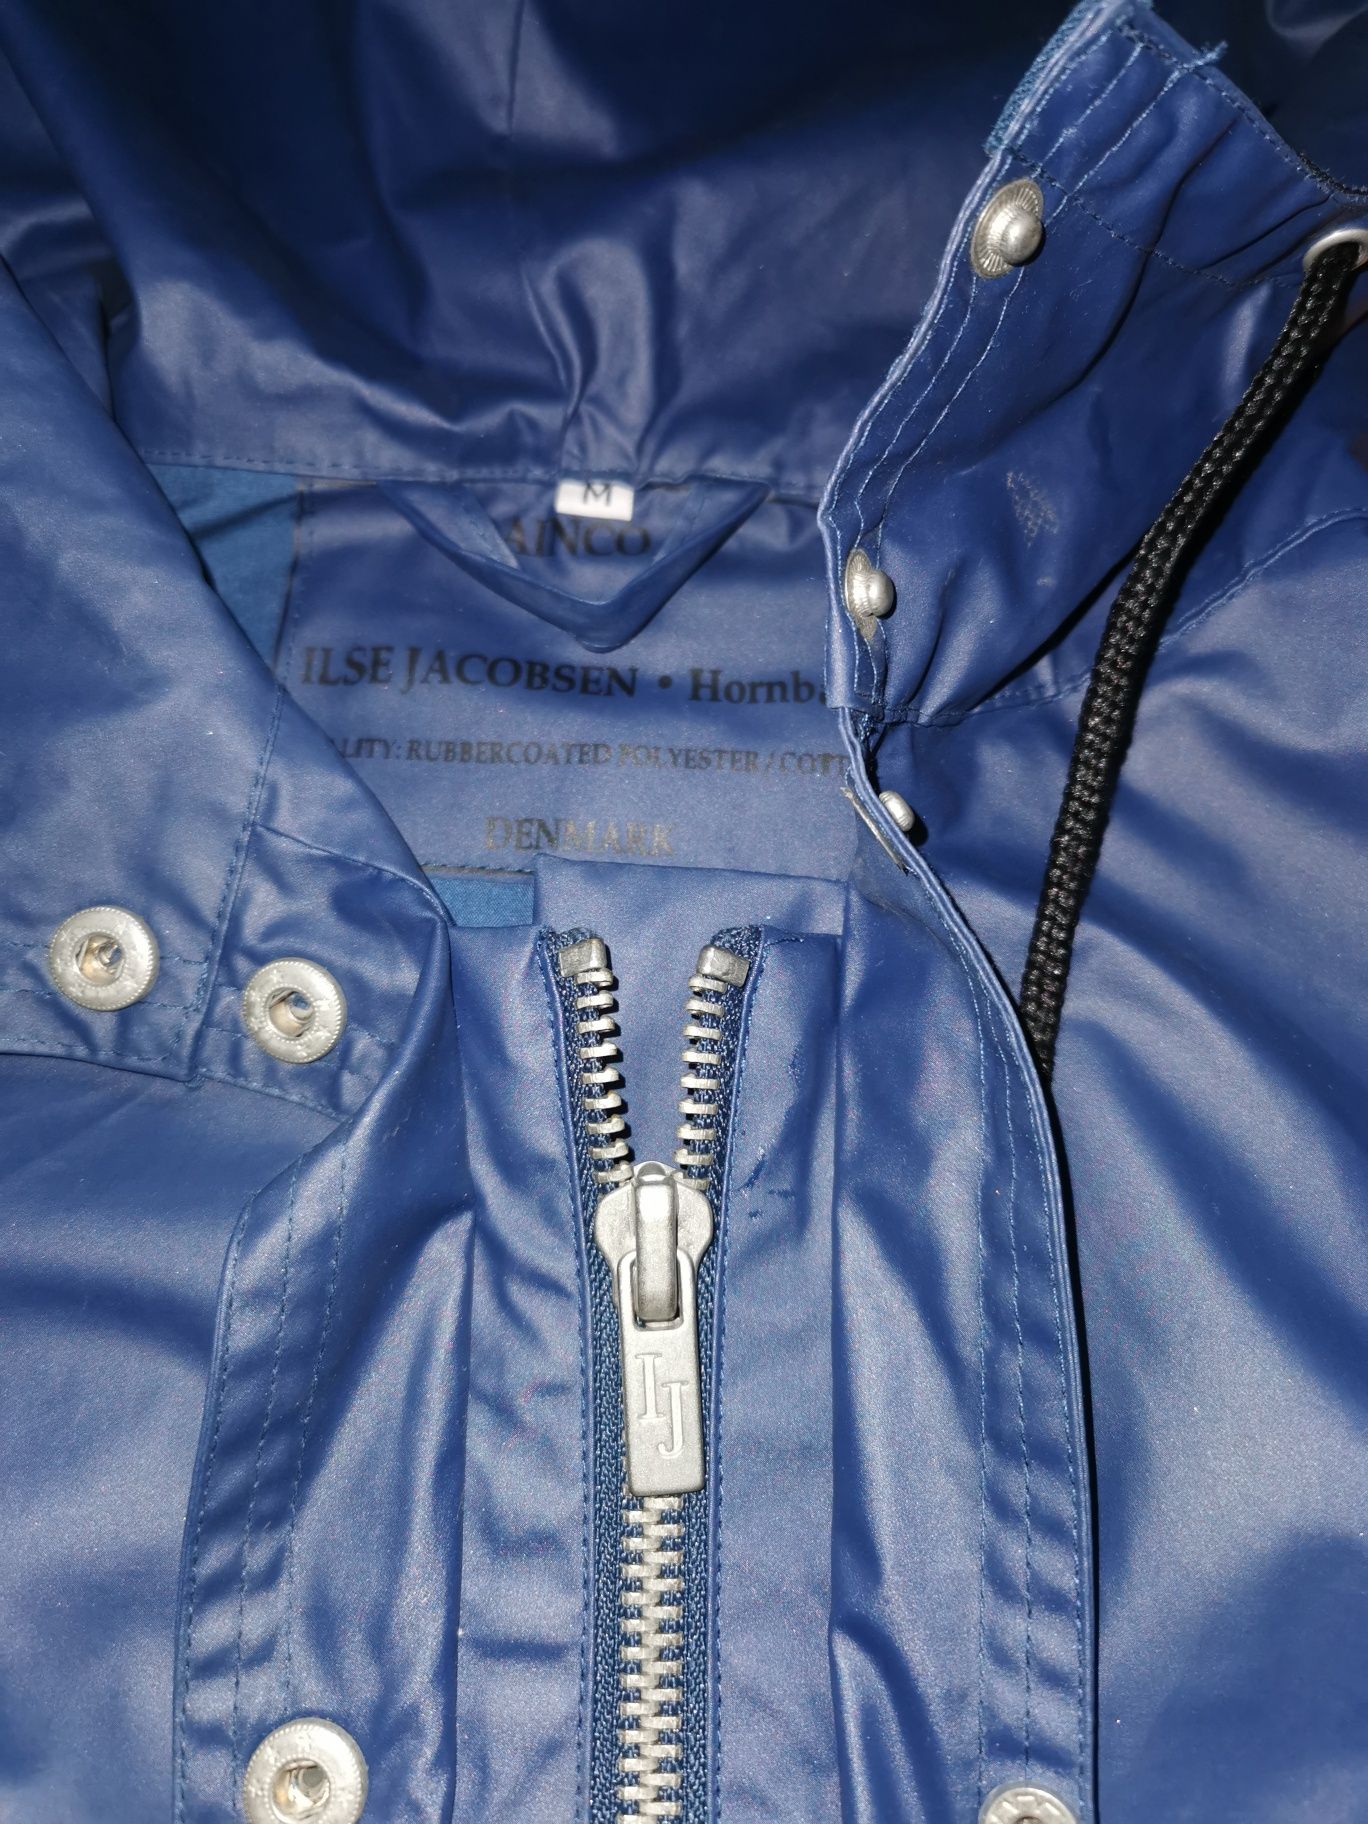 Ilse Jacobsen Hornbaek Raincoat  płaszcz przeciwdeszczowy parka M